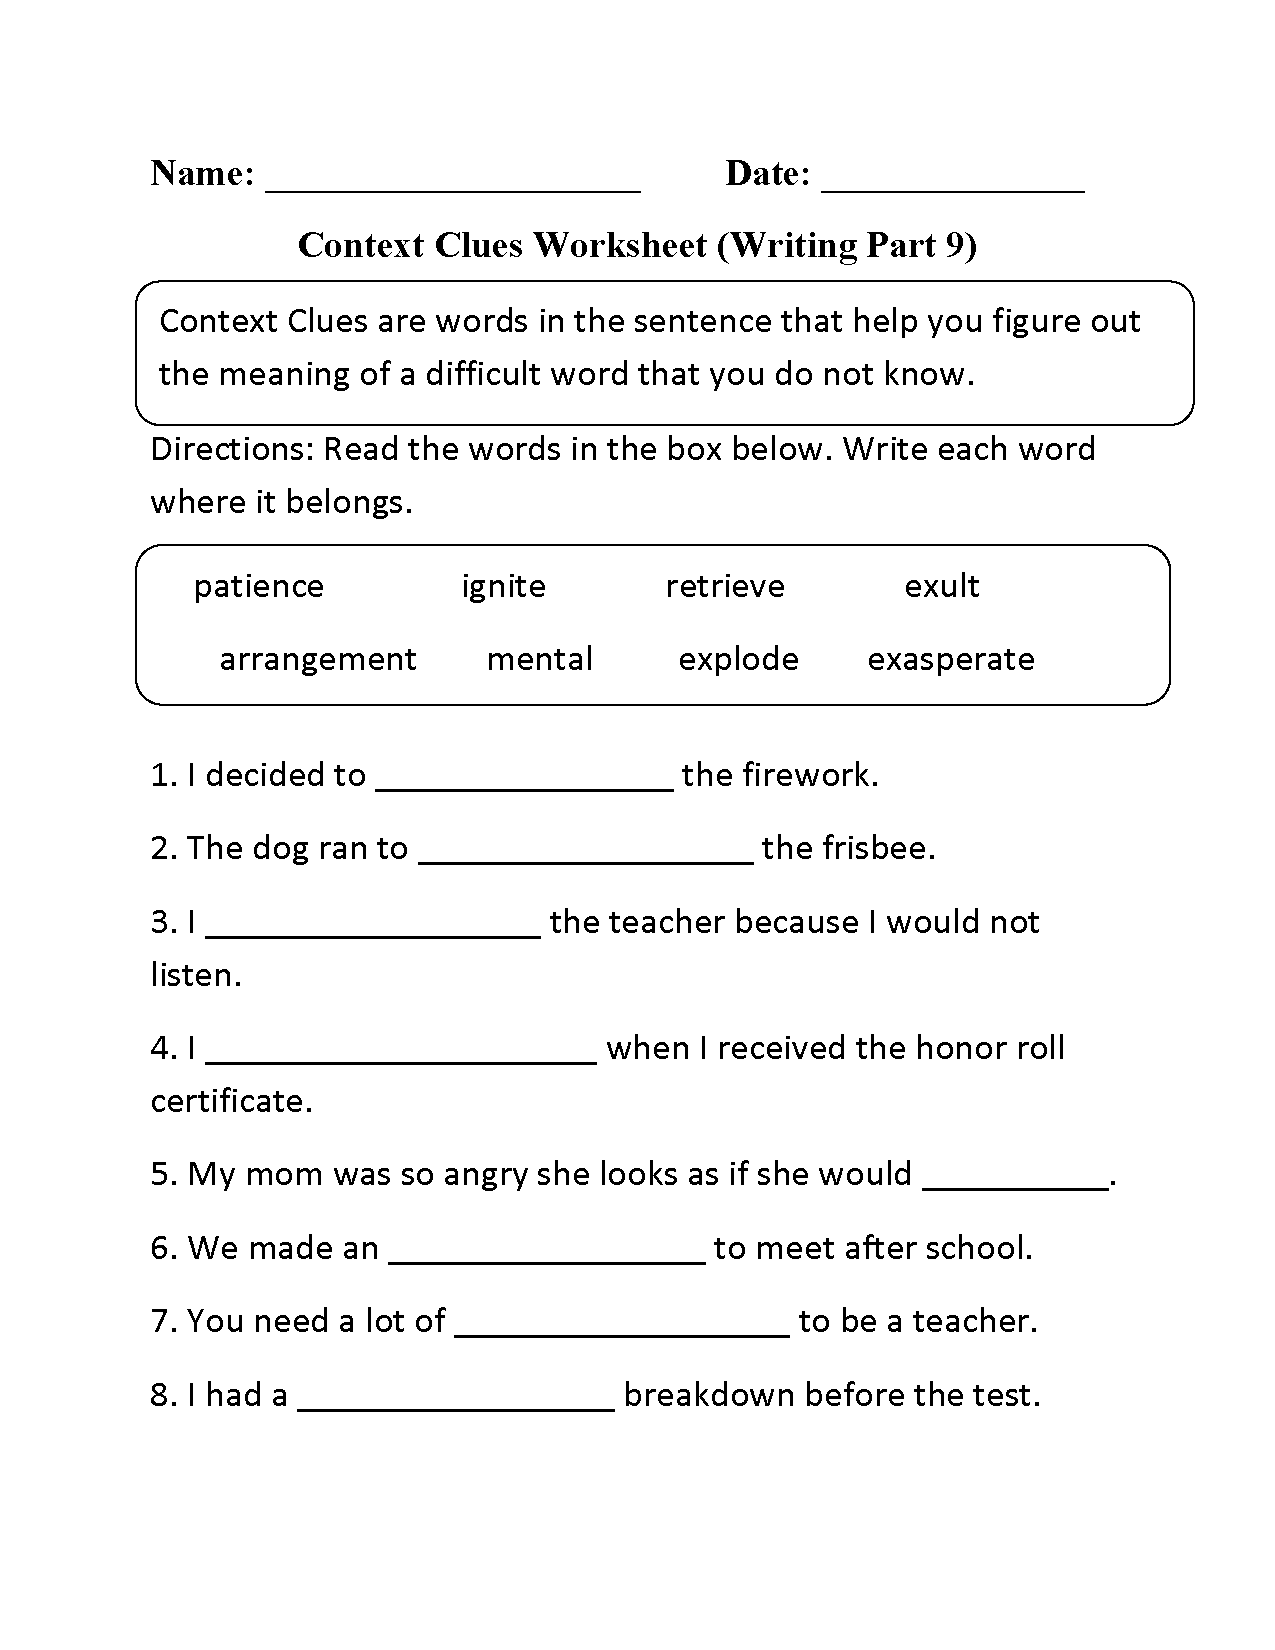 Context Clues Worksheet Writing Part 9 Intermediate Context Clues 